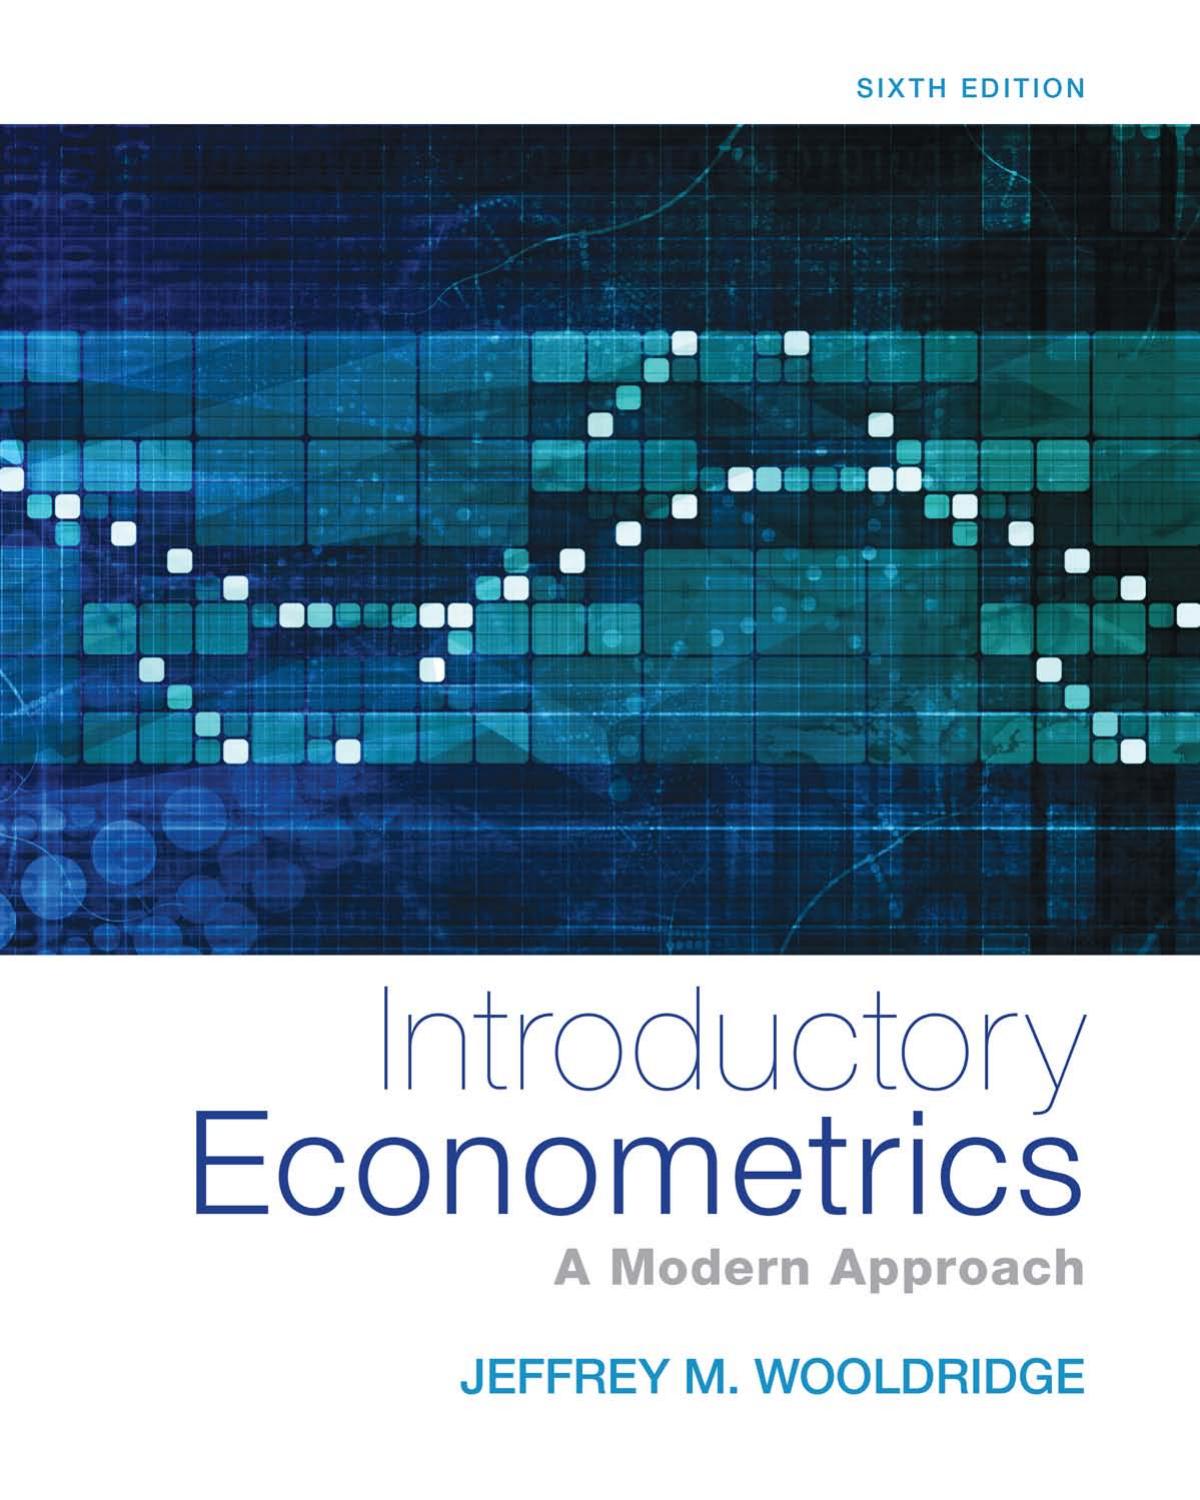 Introductory econometrics. A modern approach 2016